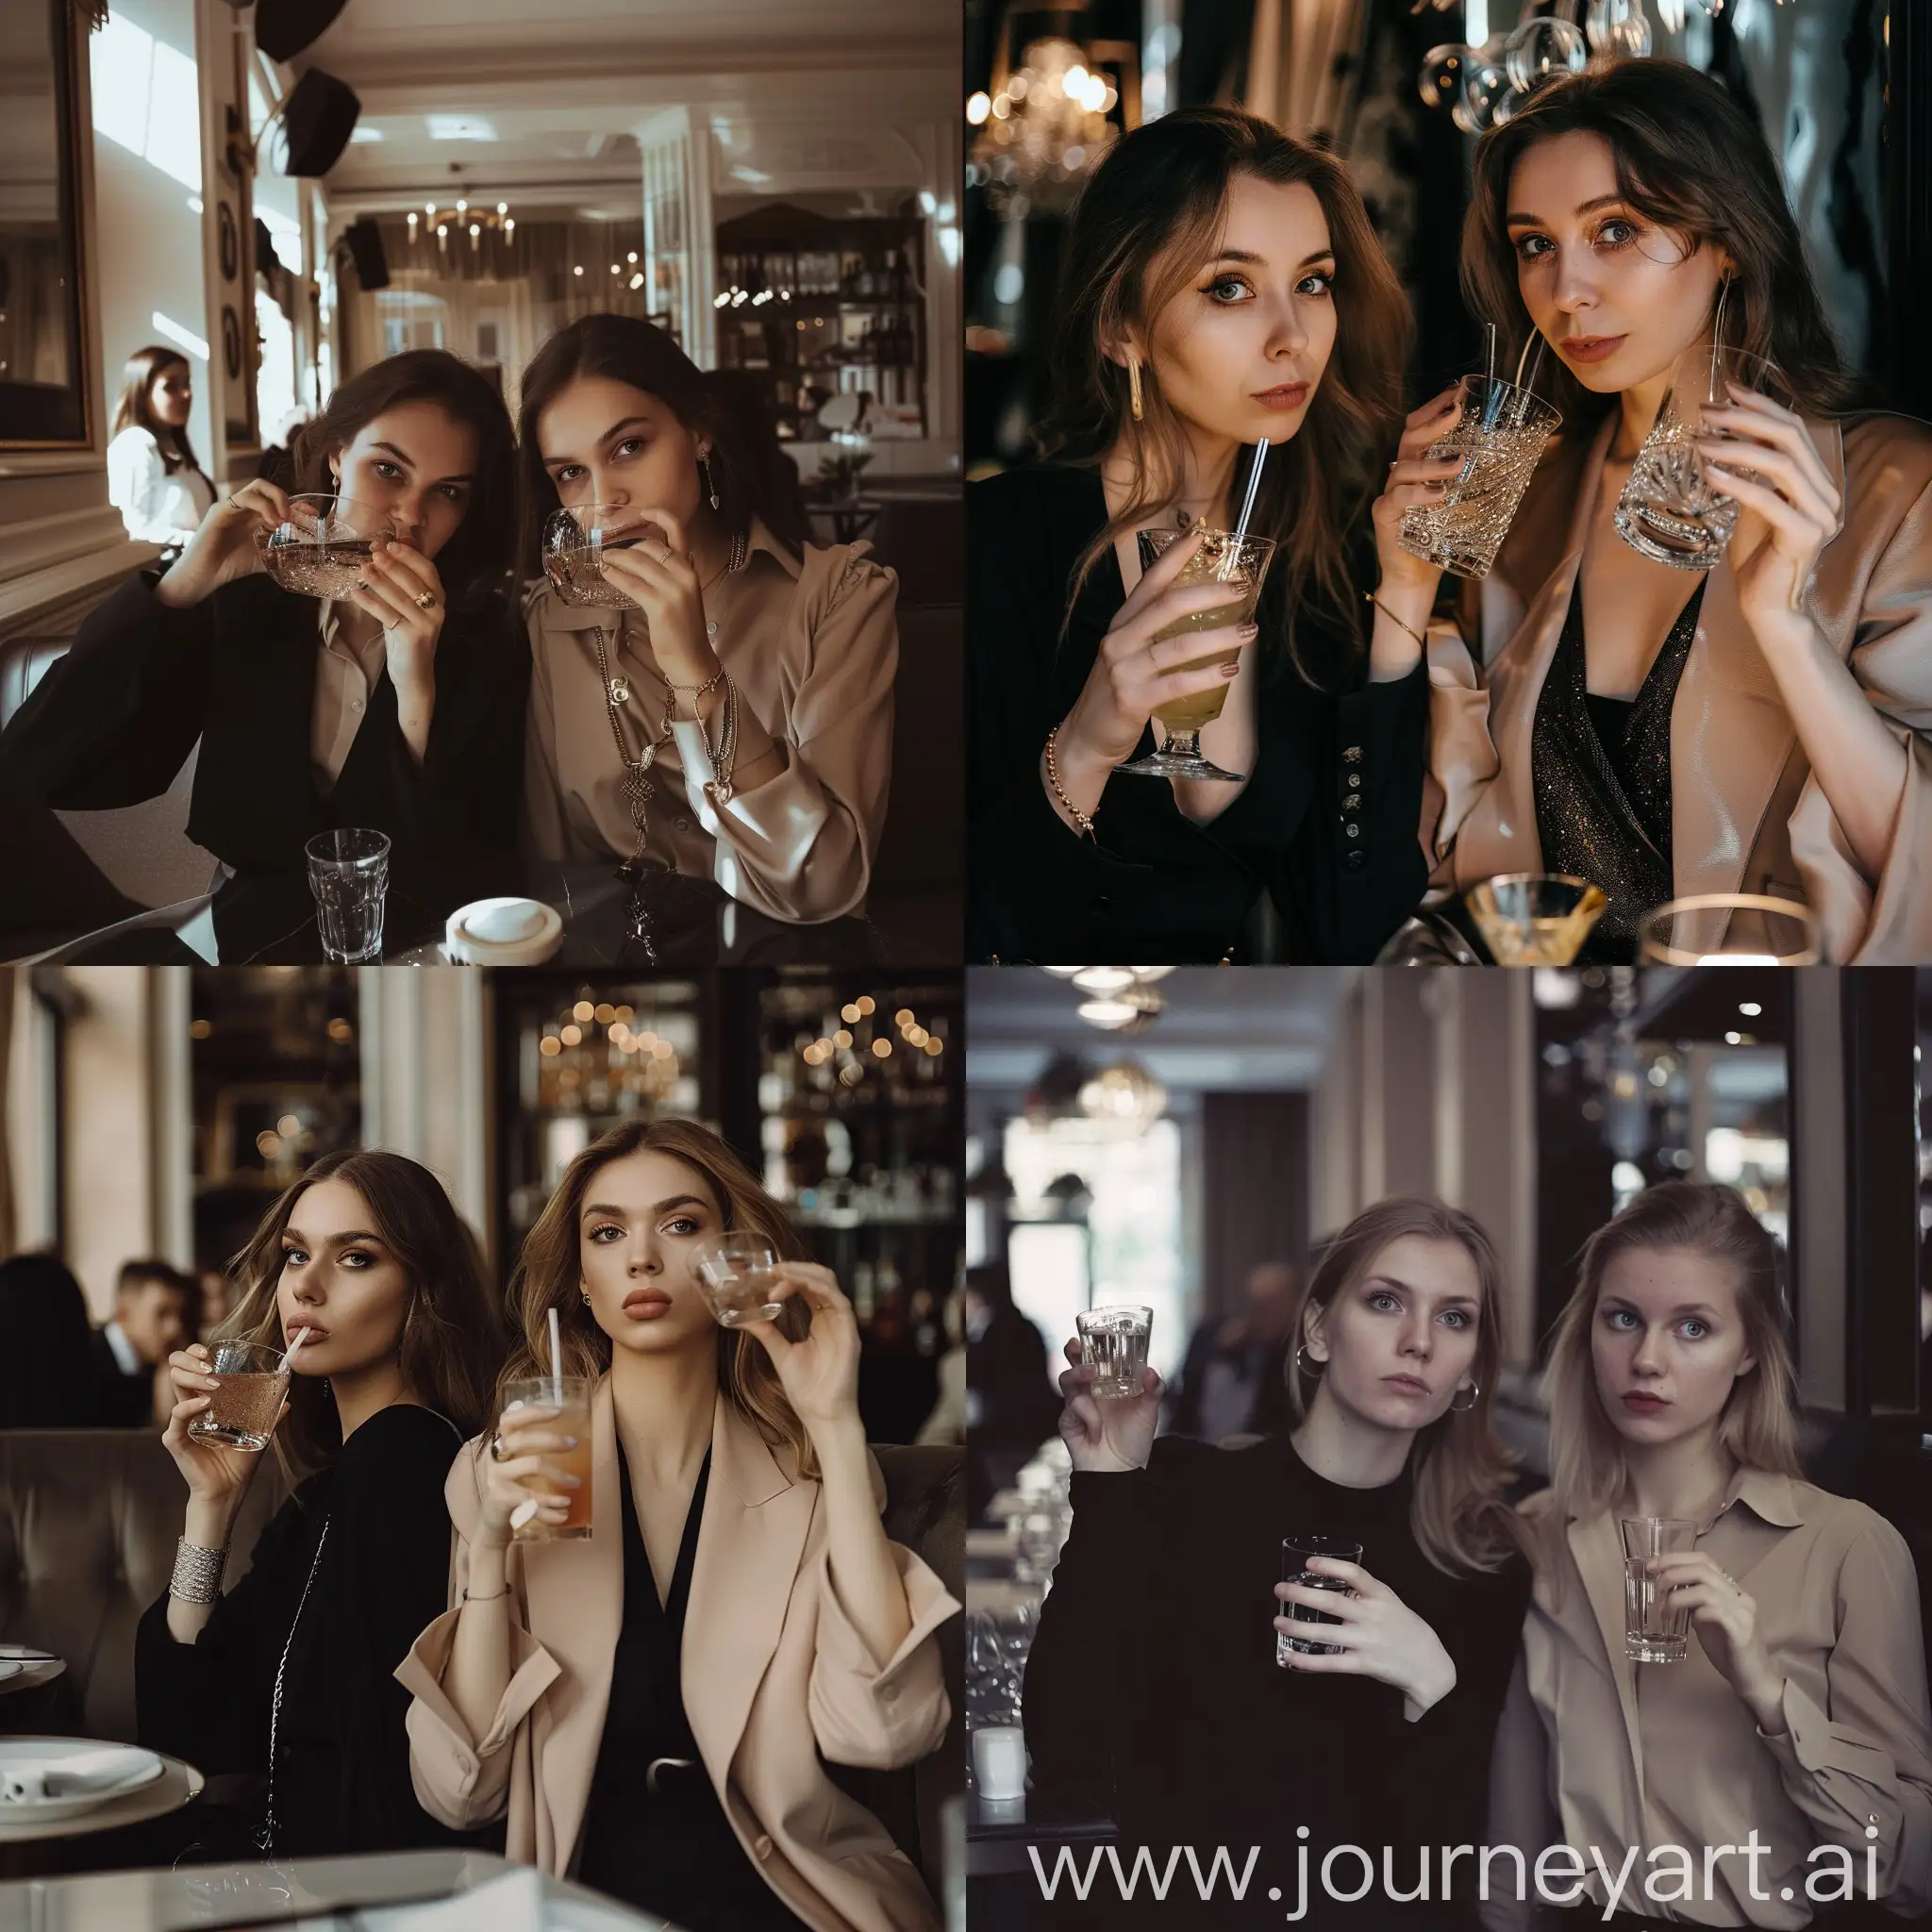 Elegant-Women-Enjoying-Cocktails-in-a-HighEnd-Restaurant